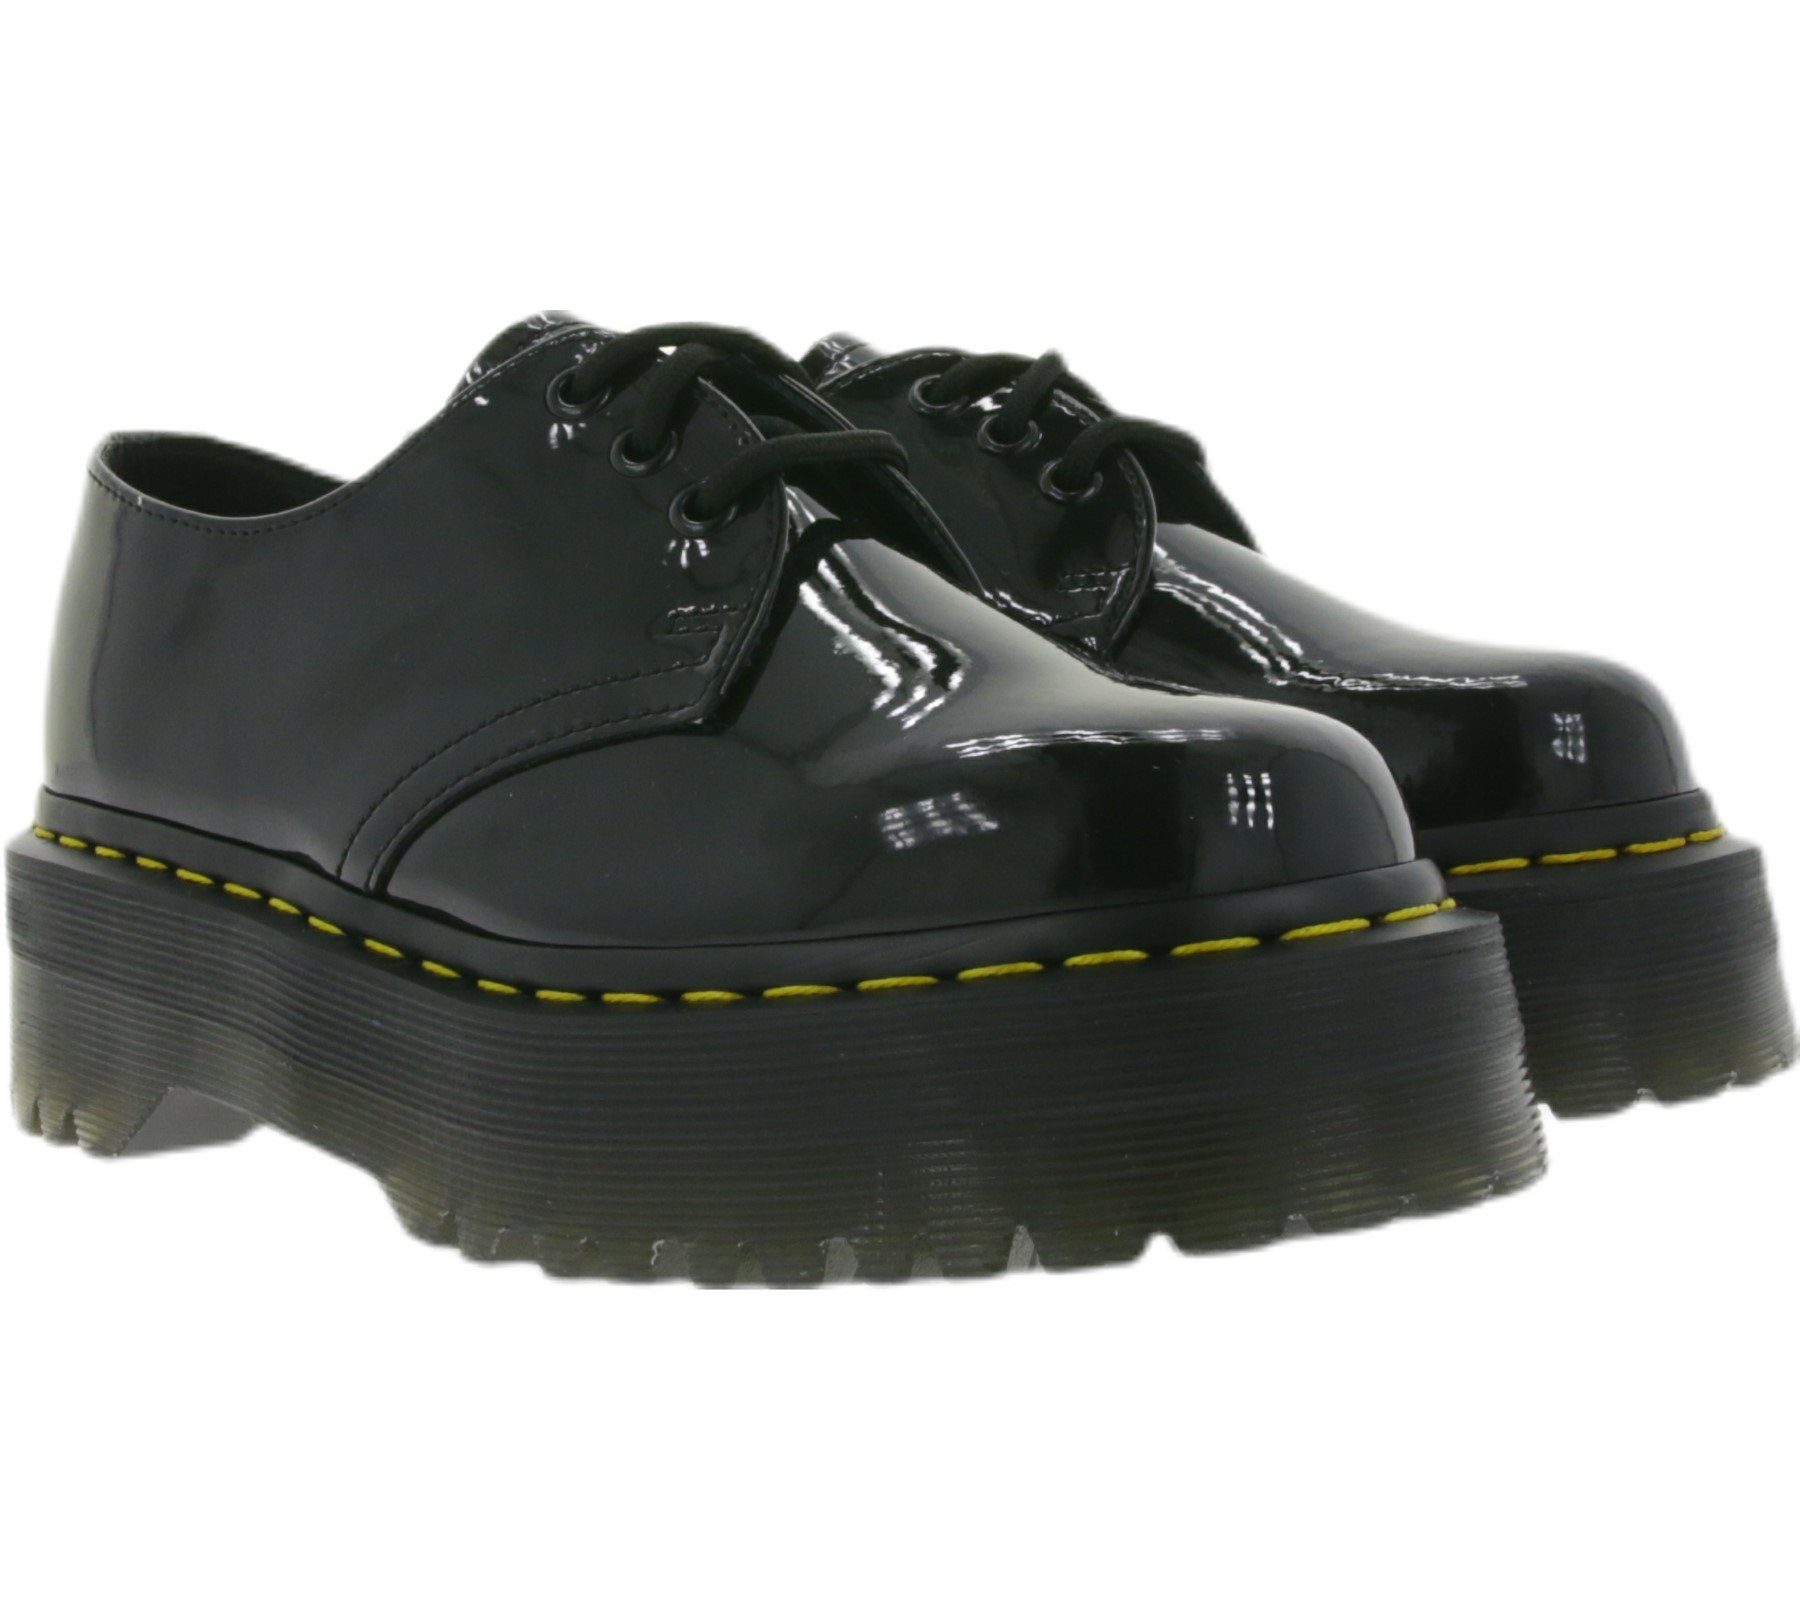 DR. MARTENS »Dr. Martens Damen Halbschuhe Echtleder-Schuhe mit  Plateau-Sohle 1461 Quad Patent Lamper Trend-Schuhe Schwarz« Sneaker online  kaufen | OTTO